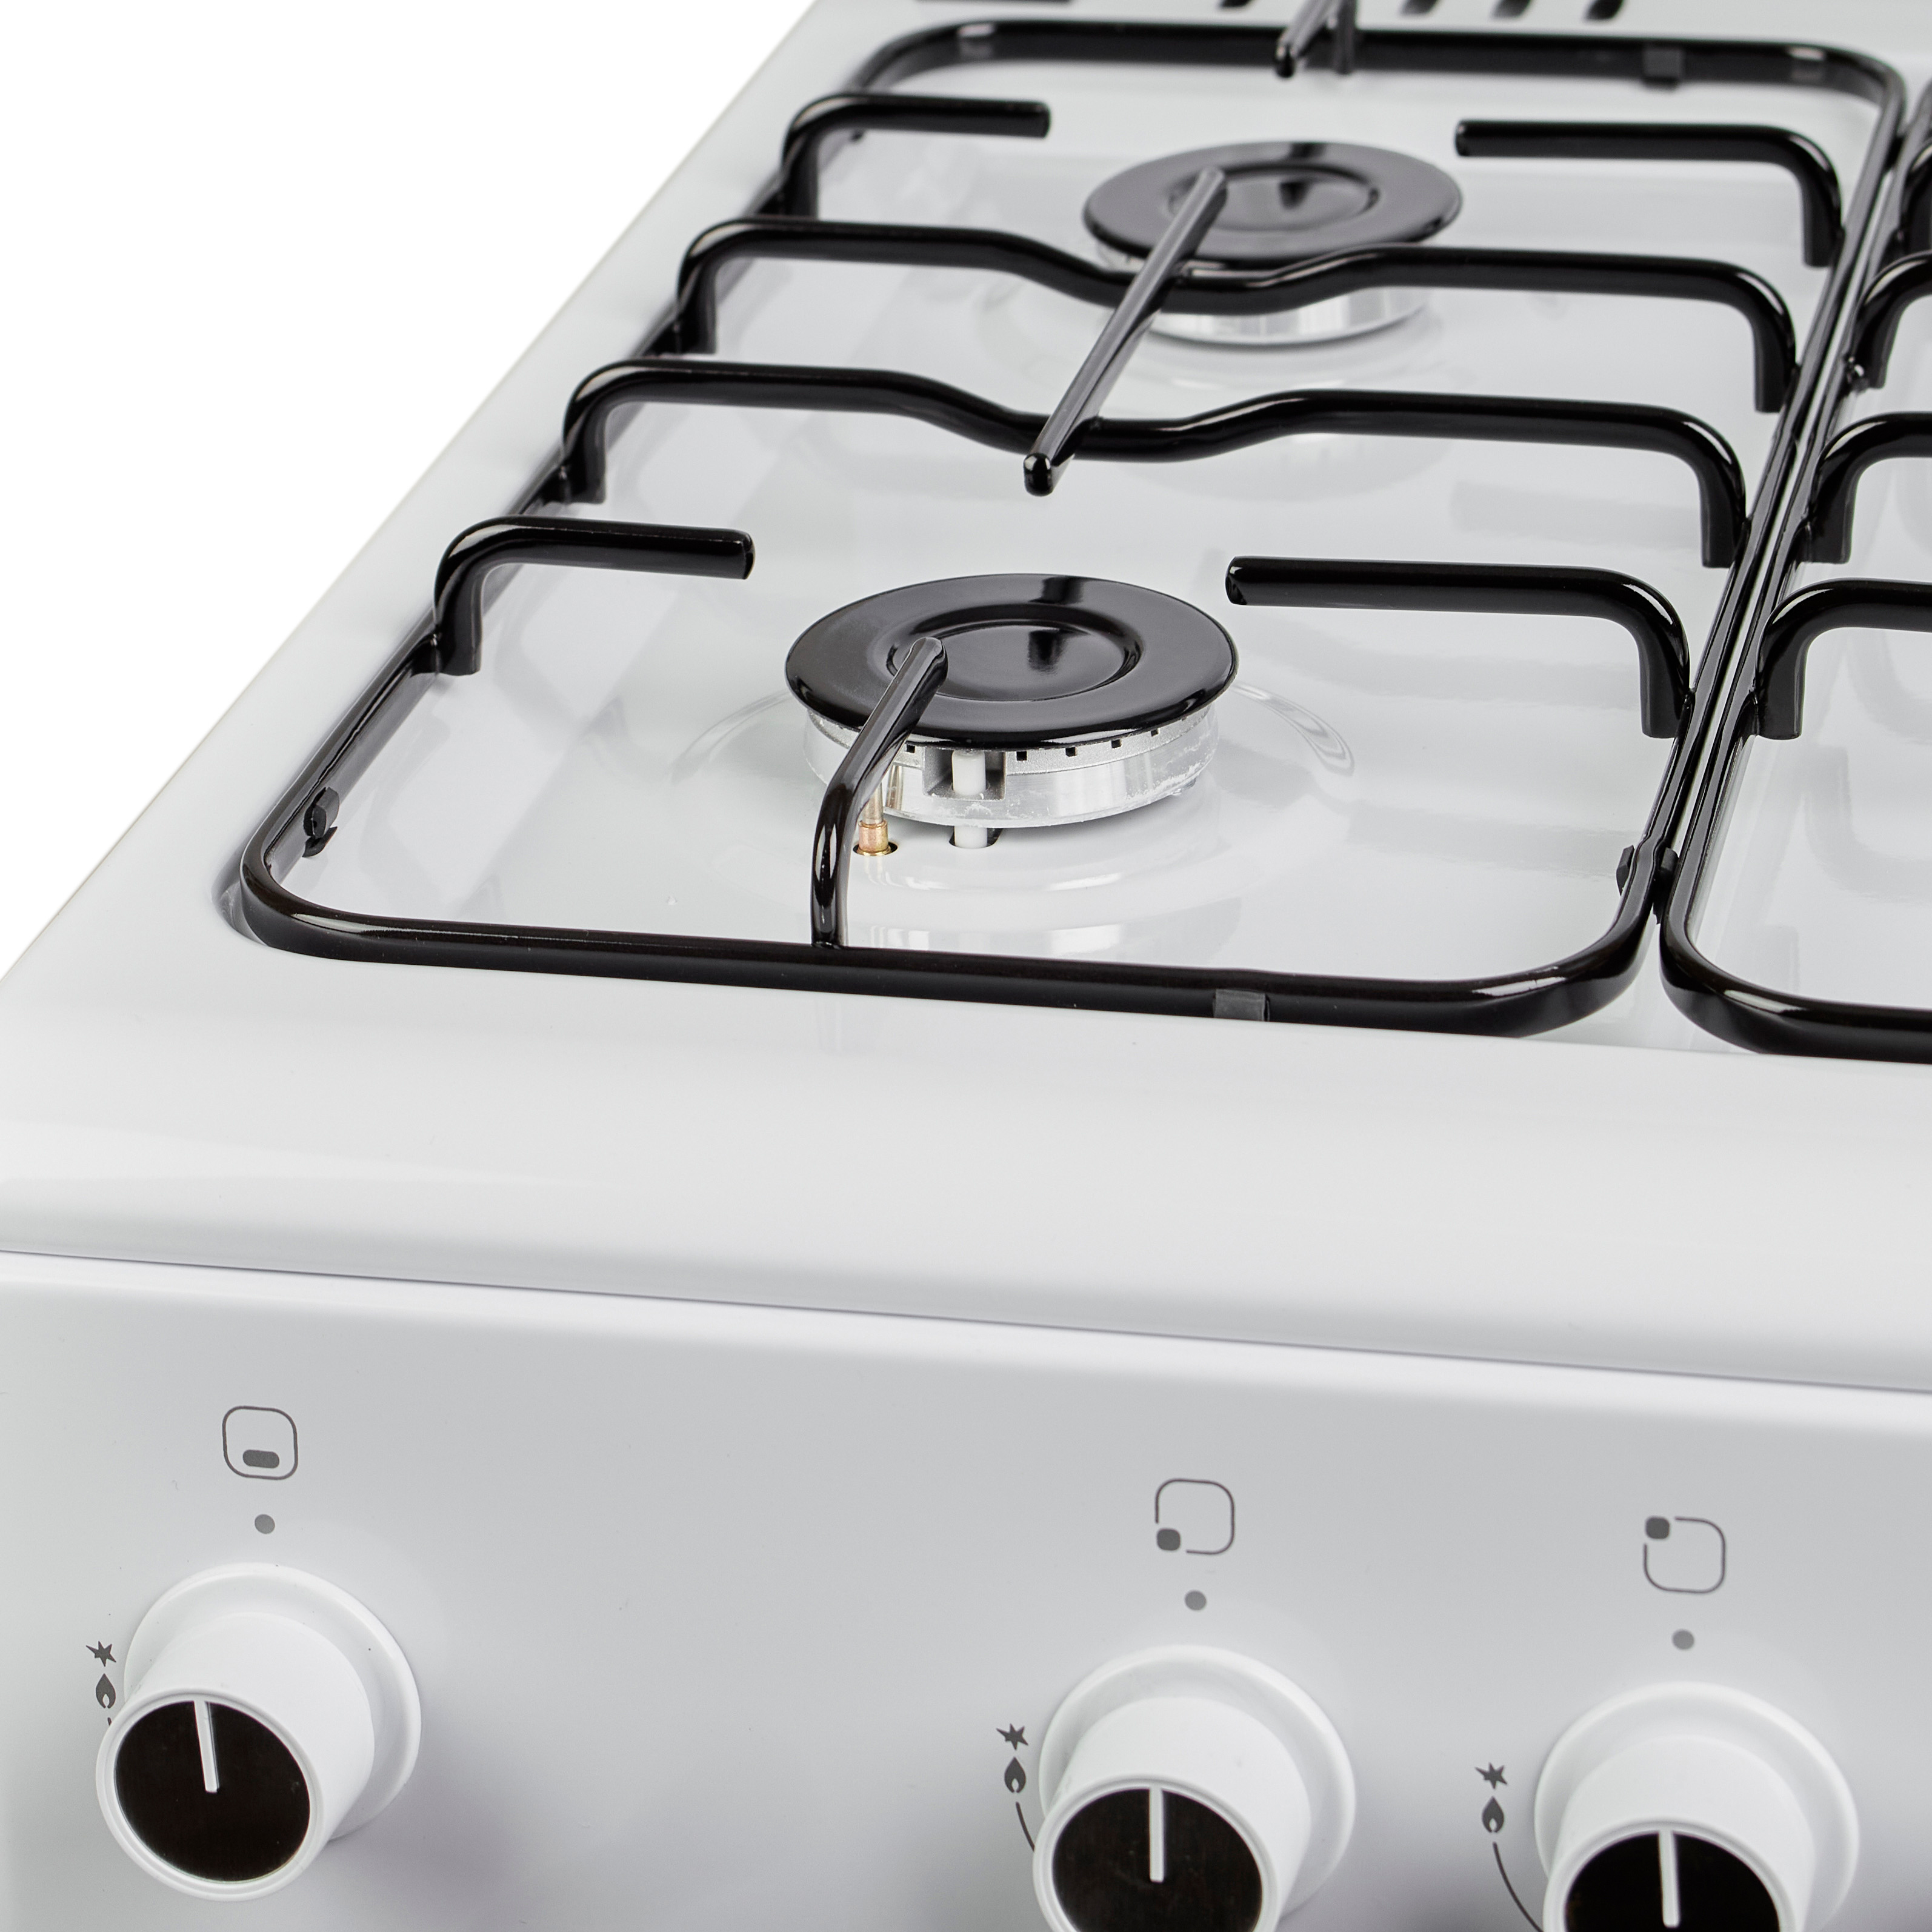 Кухонная плита Fiesta G 5403 SACD-W характеристики - фотография 7